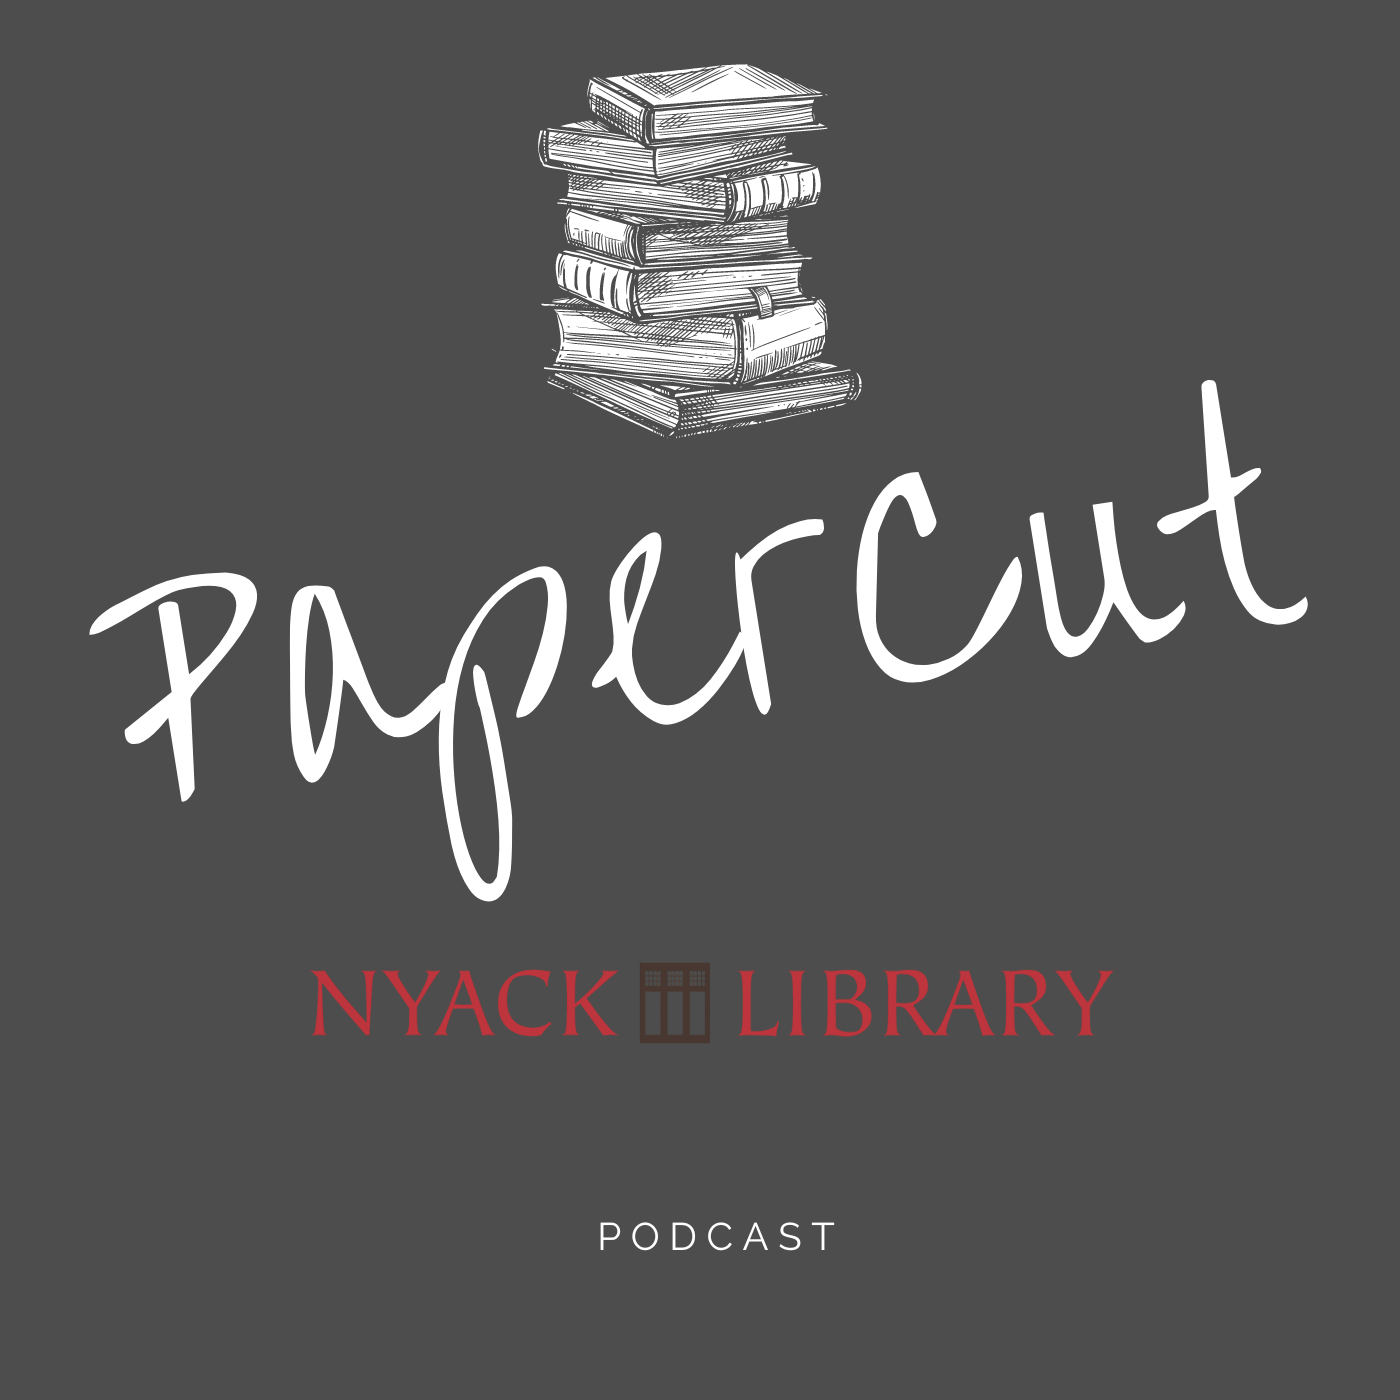 Papercut: Nyack Library Podcast